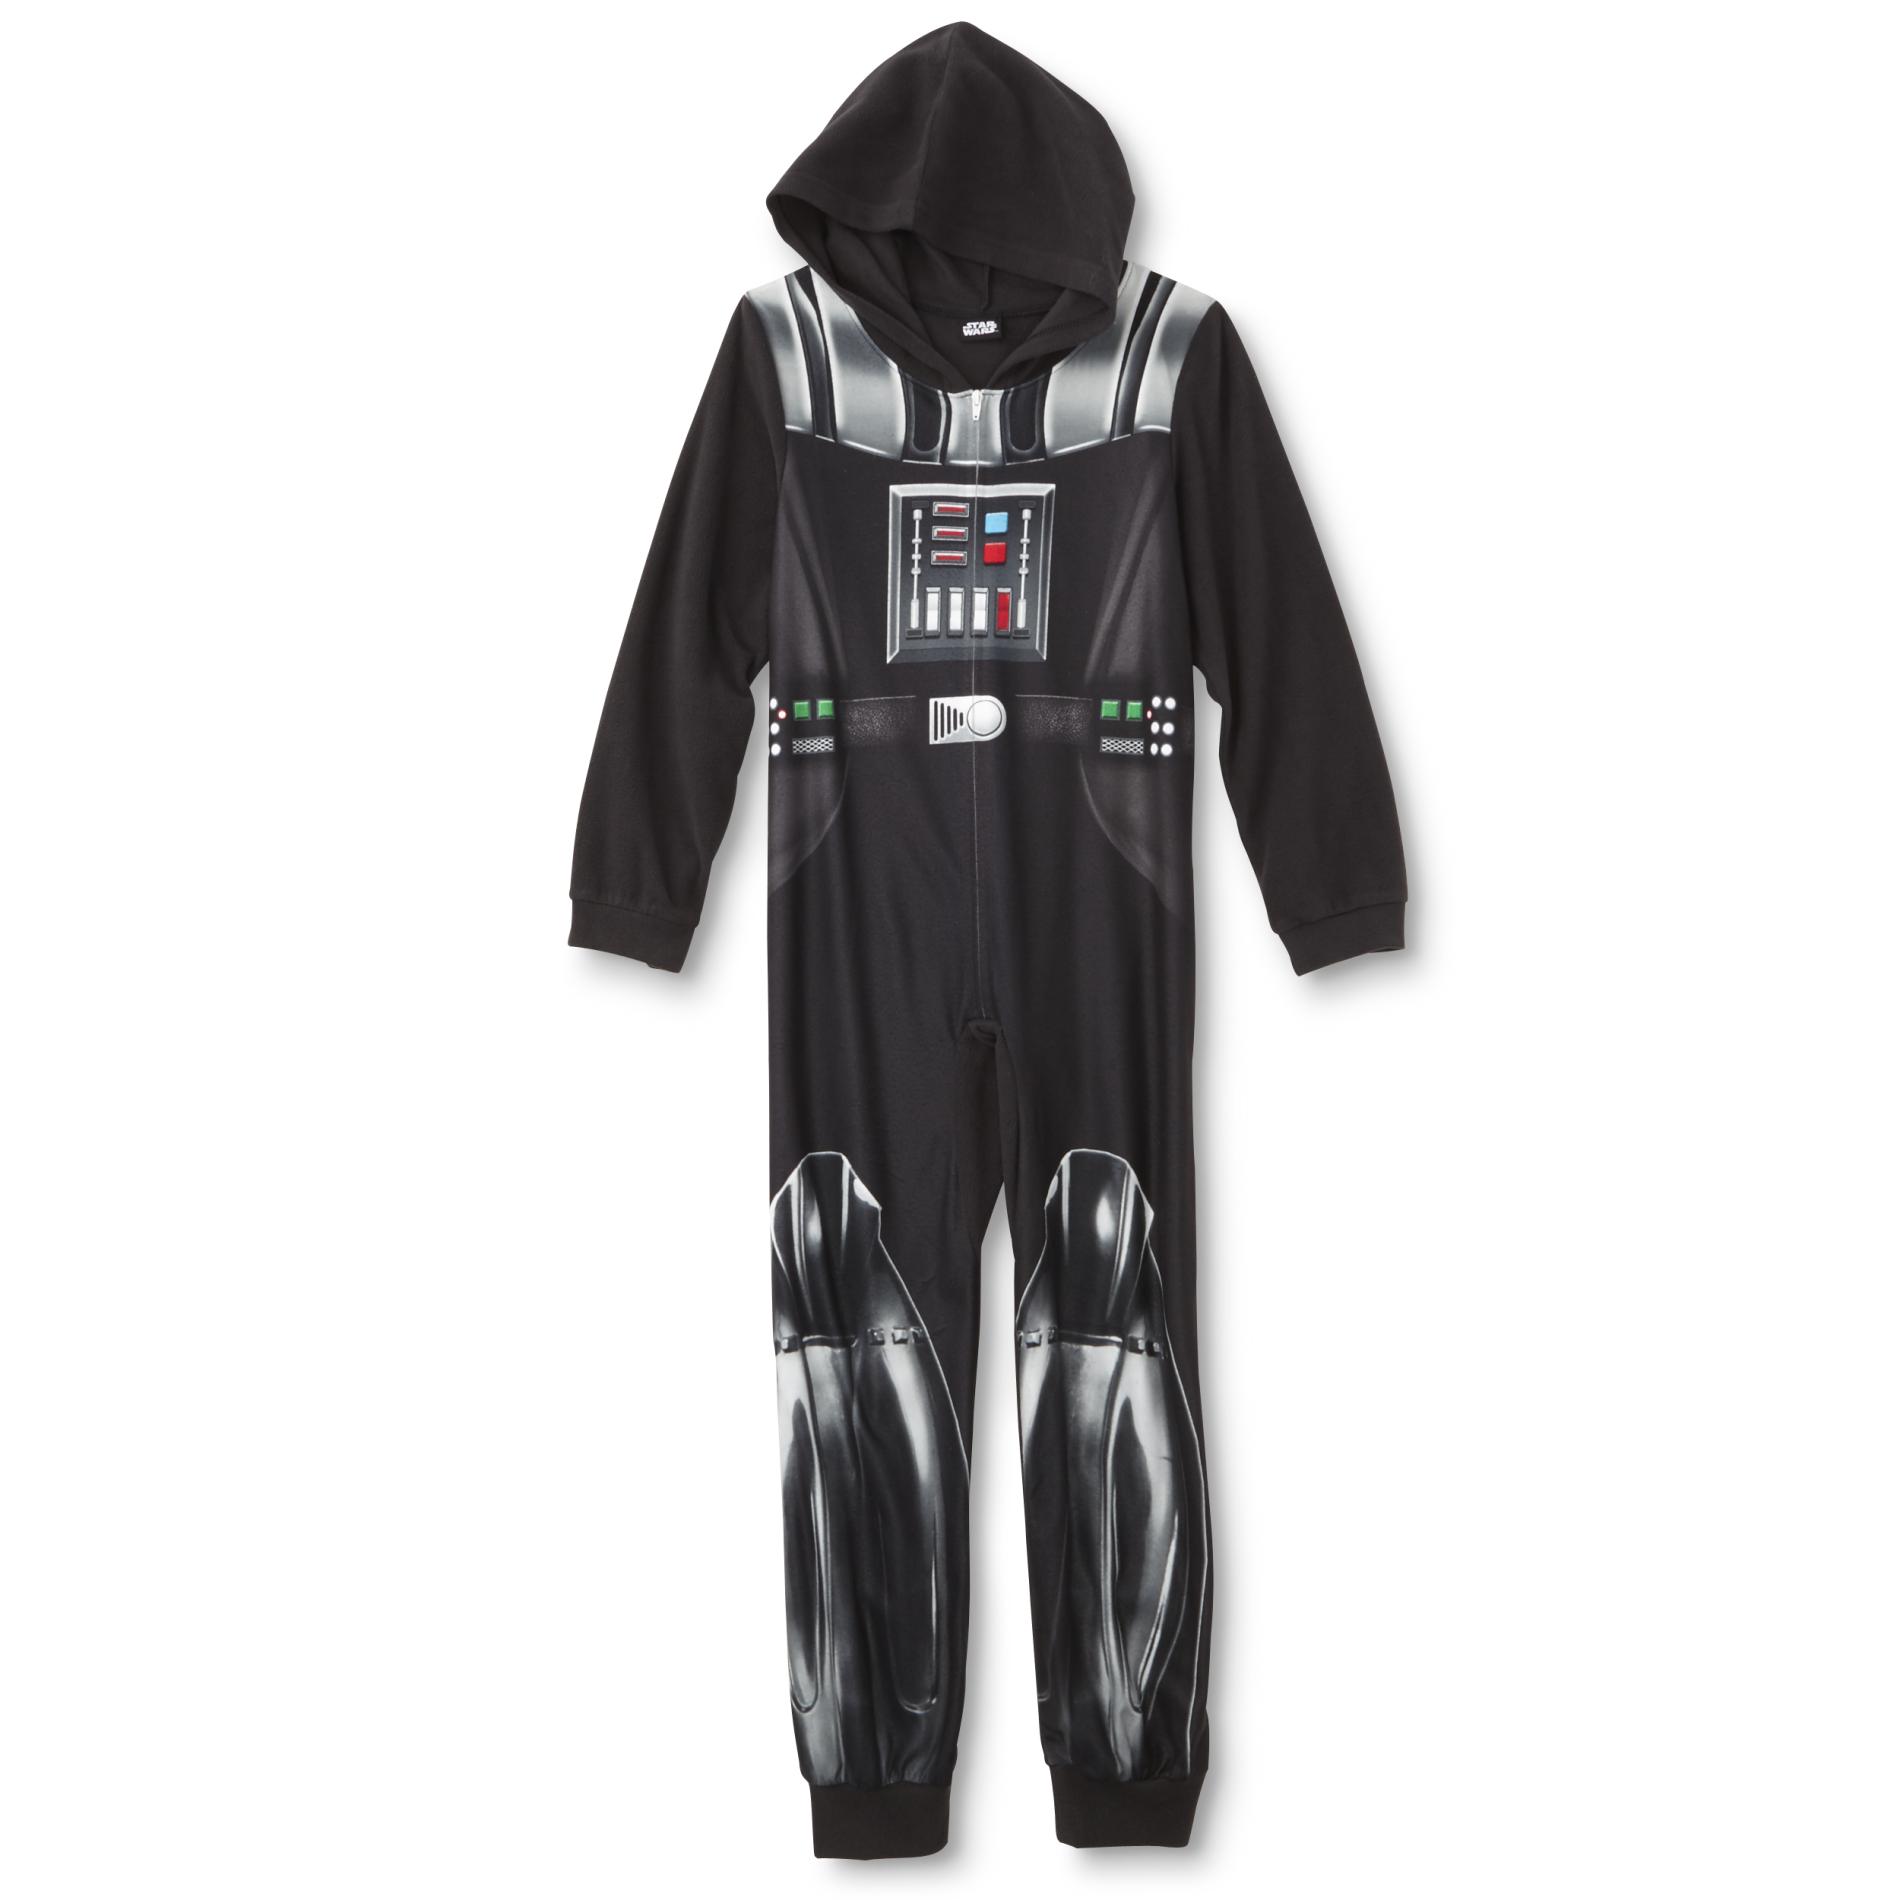 Lucasfilm Star Wars Boys' Hooded One-Piece Pajamas - Darth Vader